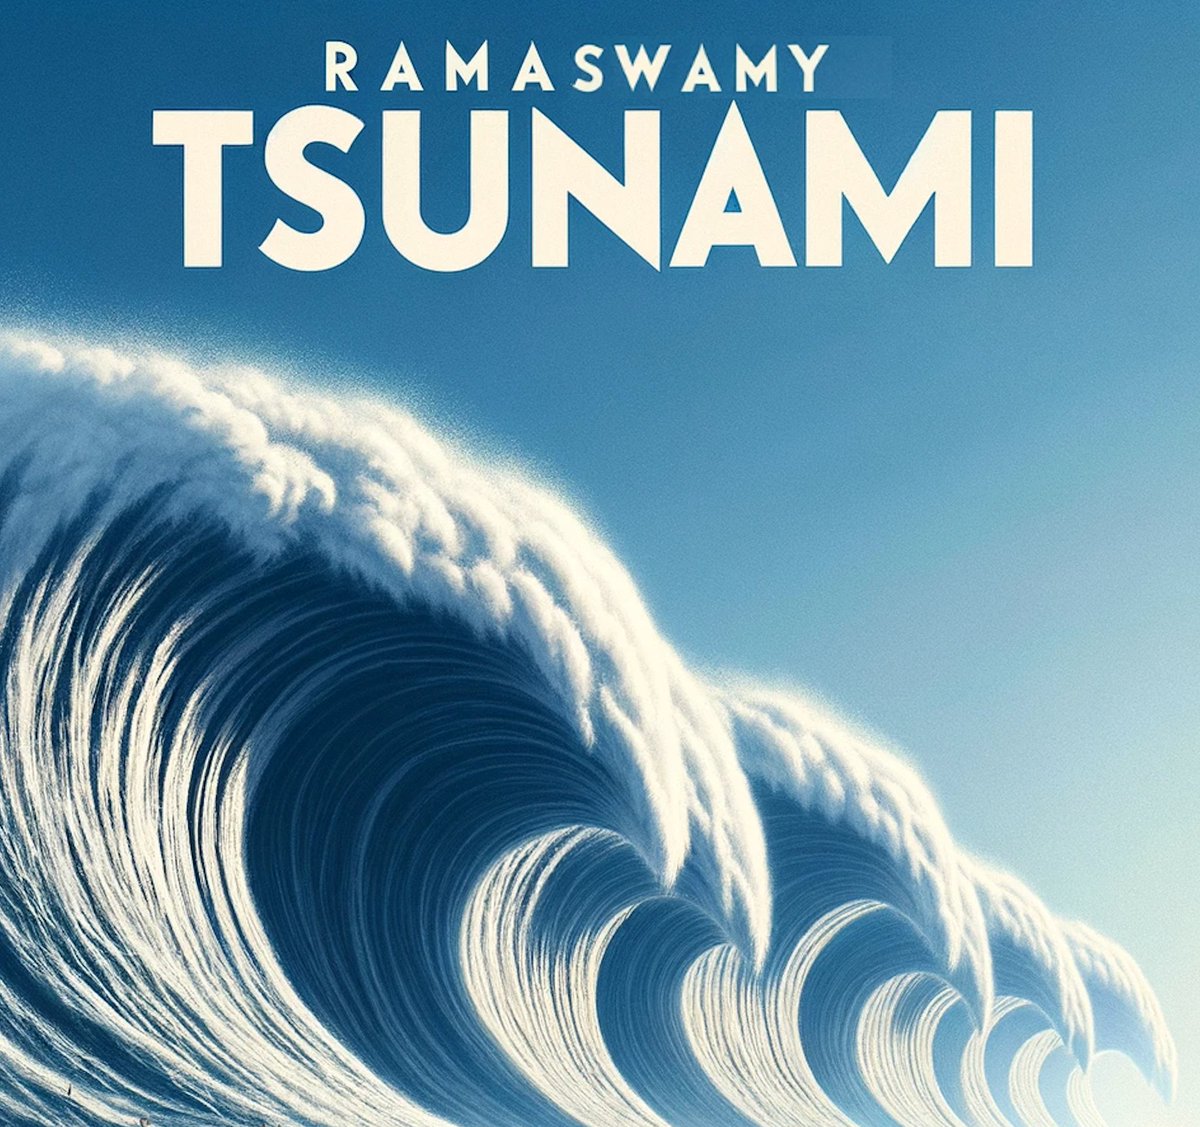 We need this now more than ever. 
#RamaswamyTsunami